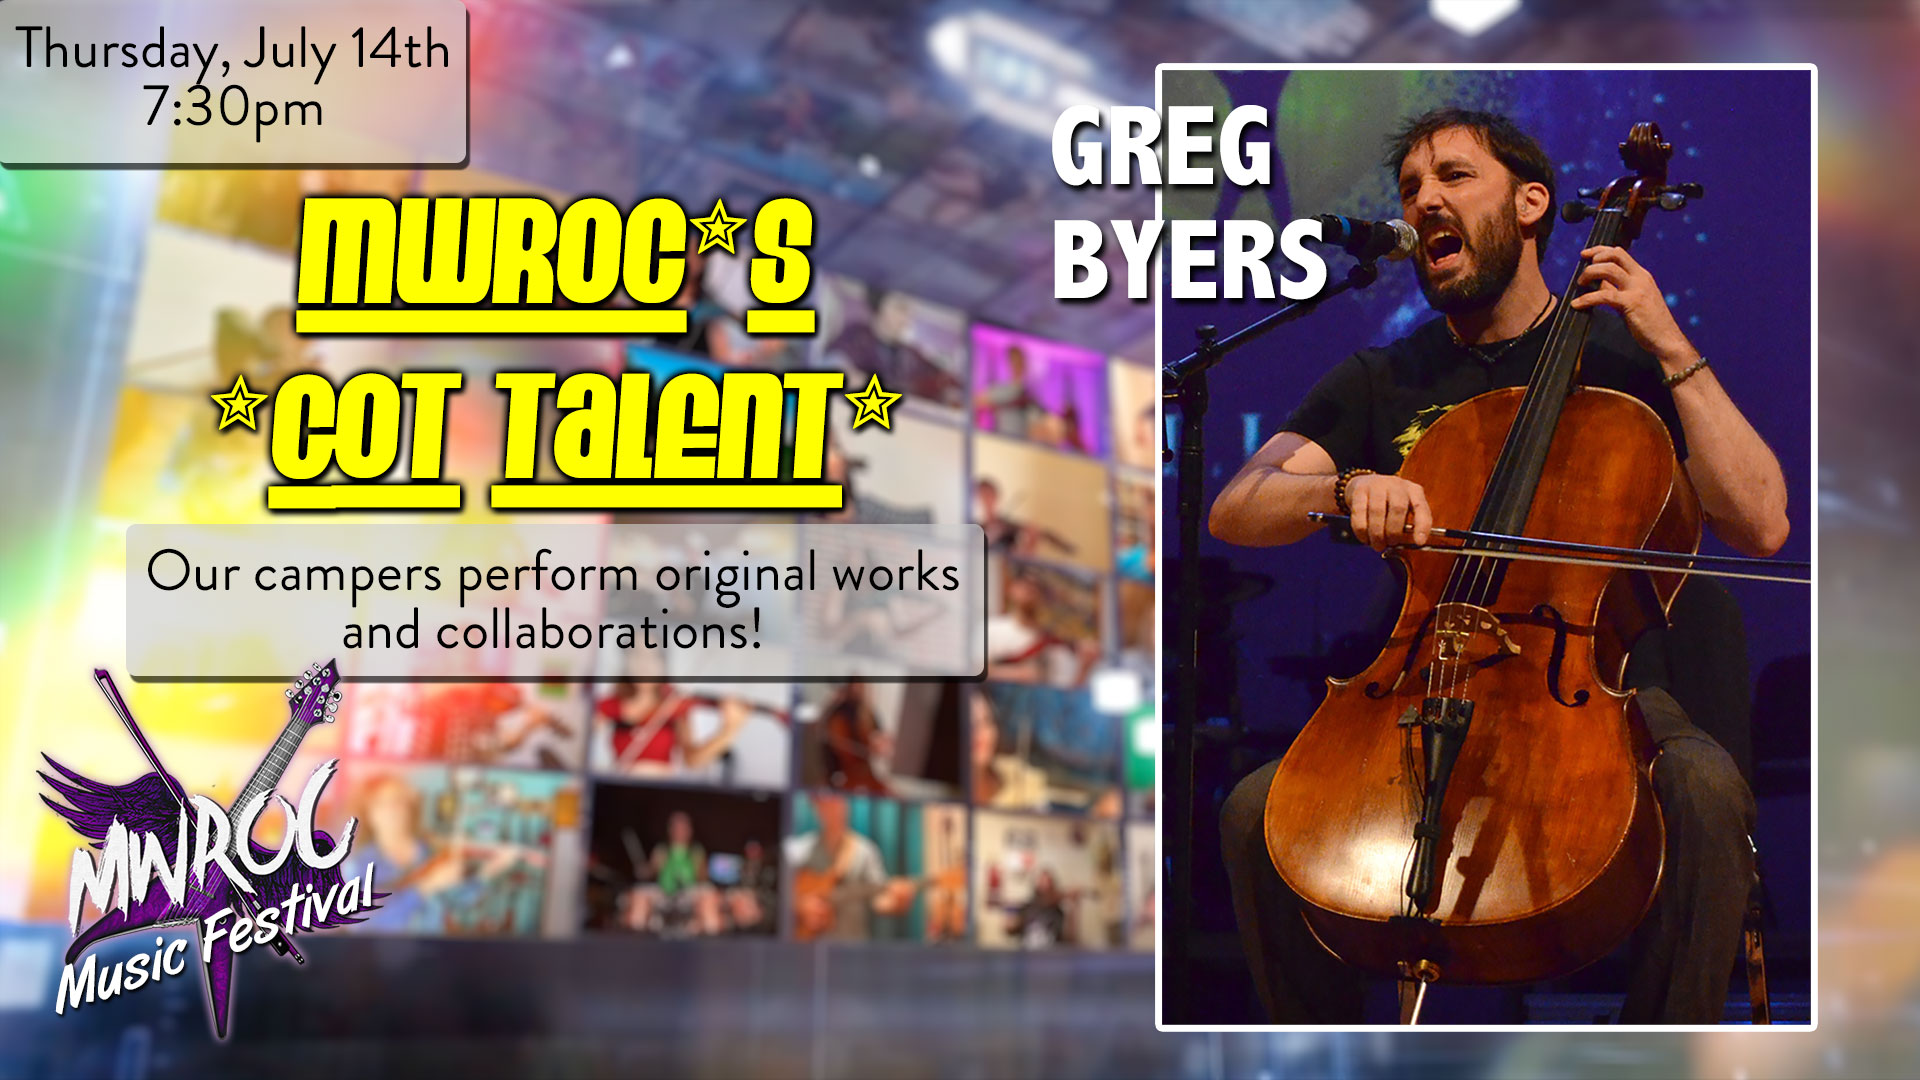 MWROC Festival – MWROC’s Got Talent and Greg Byers